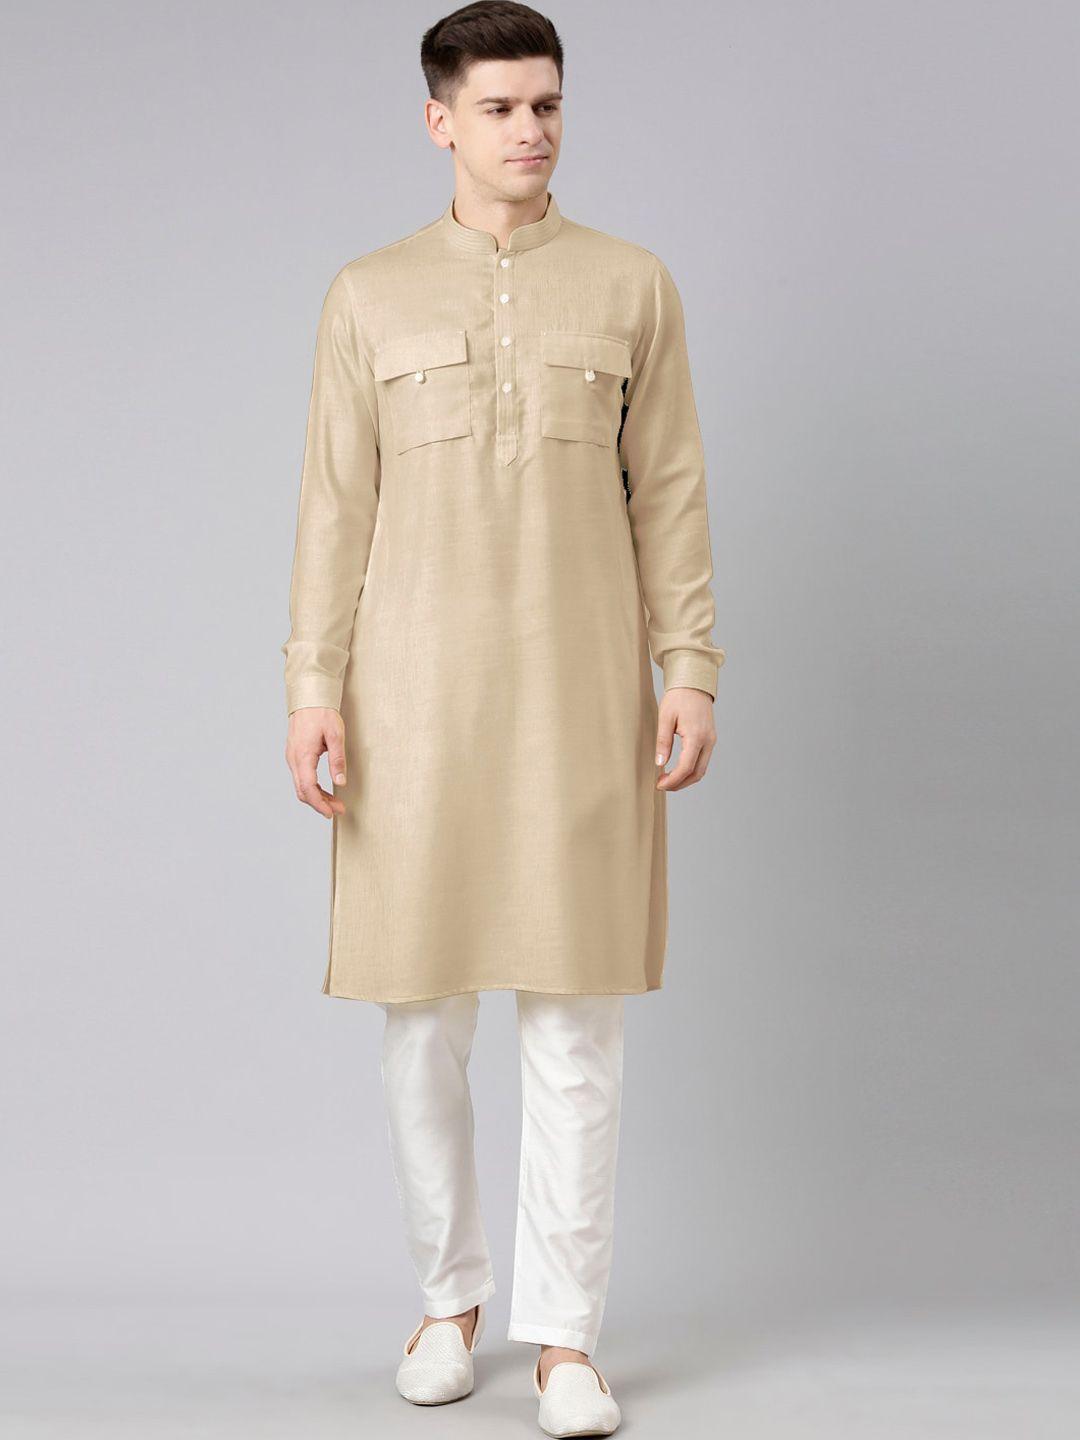 theethnic.co mandarin collar pathani pure cotton kurta with pyjamas